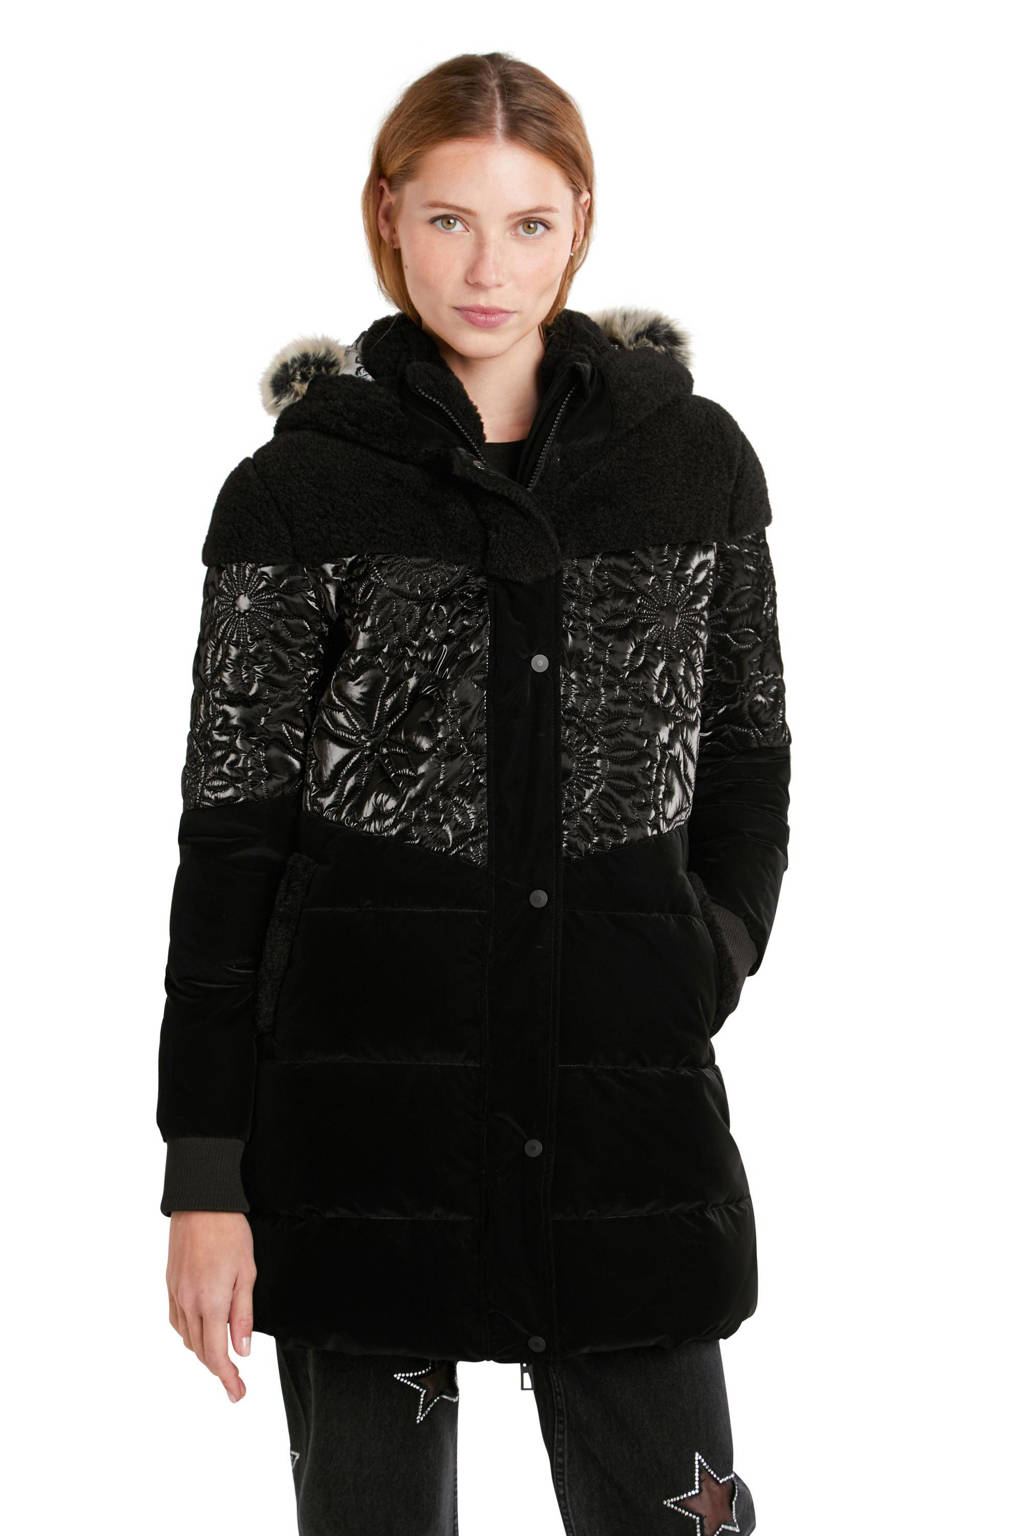 Zwarte dames Desigual gewatteerde jas van polyester met lange mouwen, capuchon en rits- en drukknoopsluiting